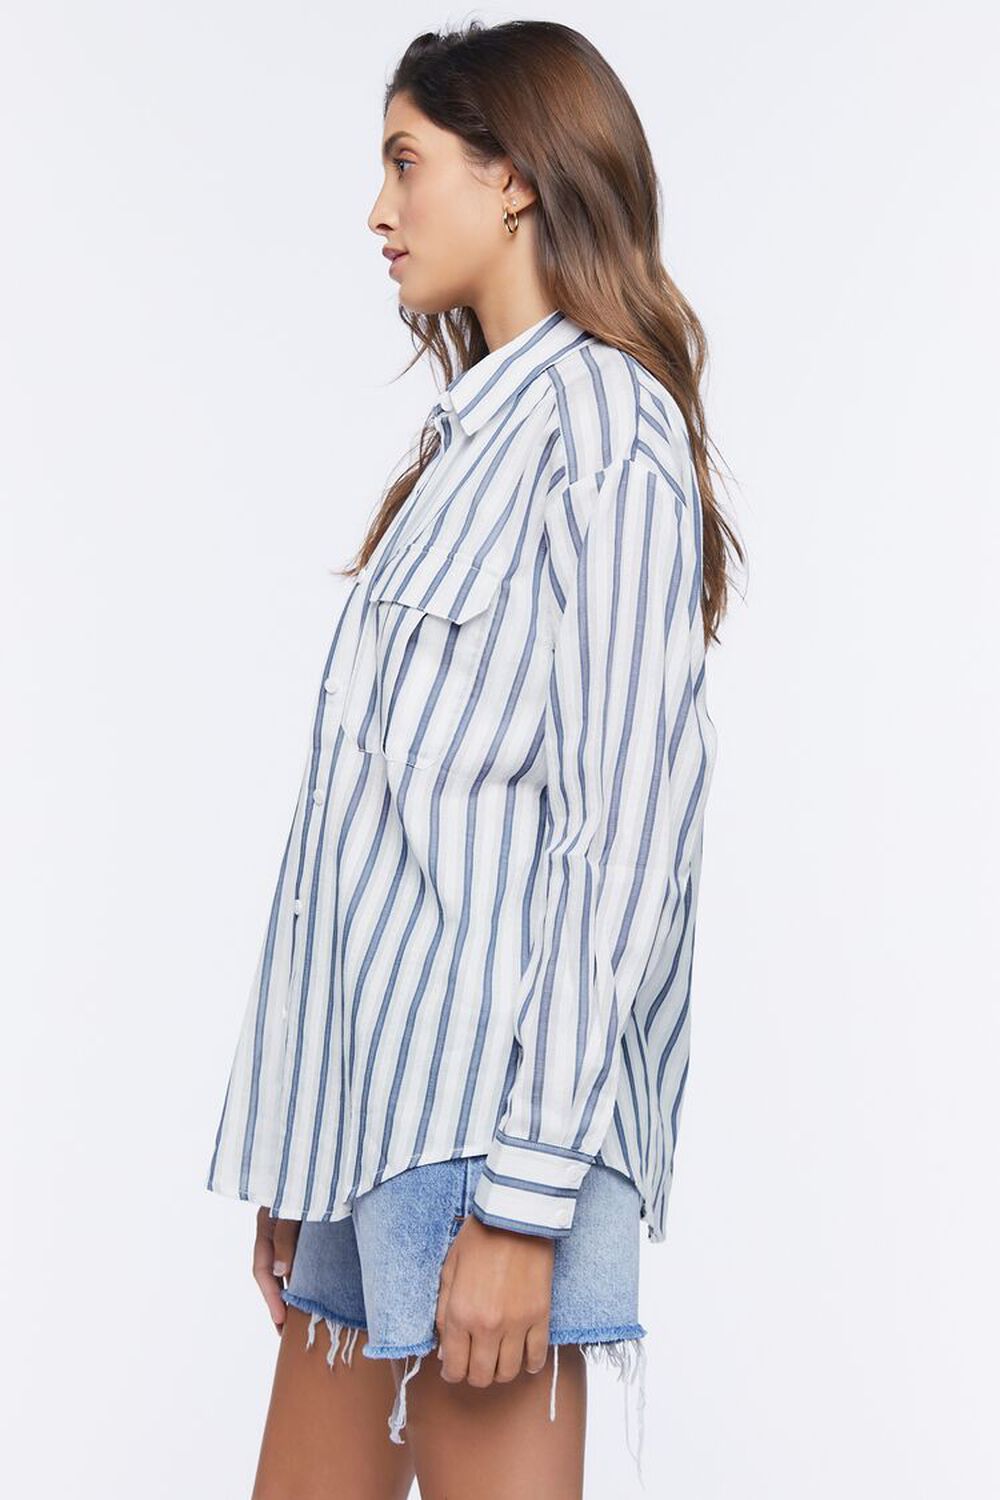 WHITE/NAVY Striped Curved-Hem Shirt, image 2